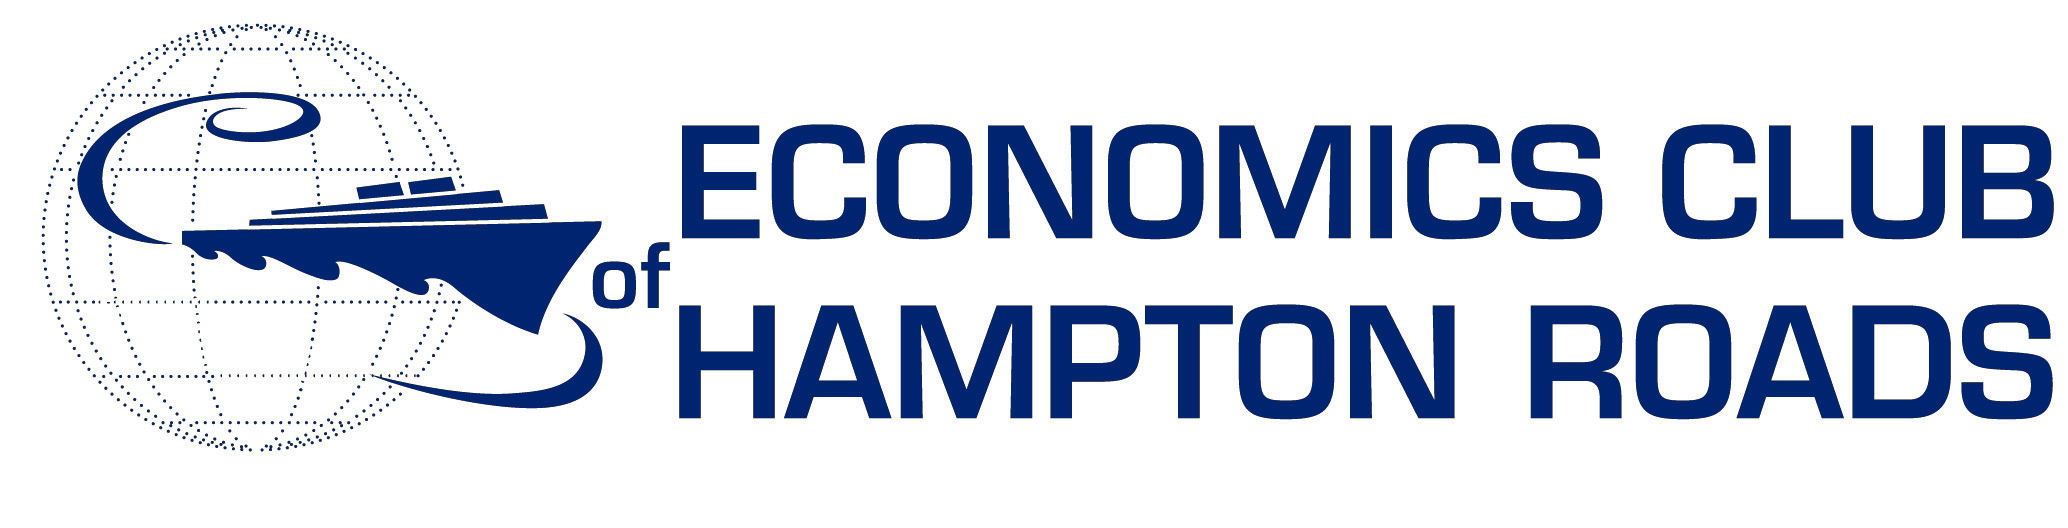 Economics Club of Hampton Roads Logo